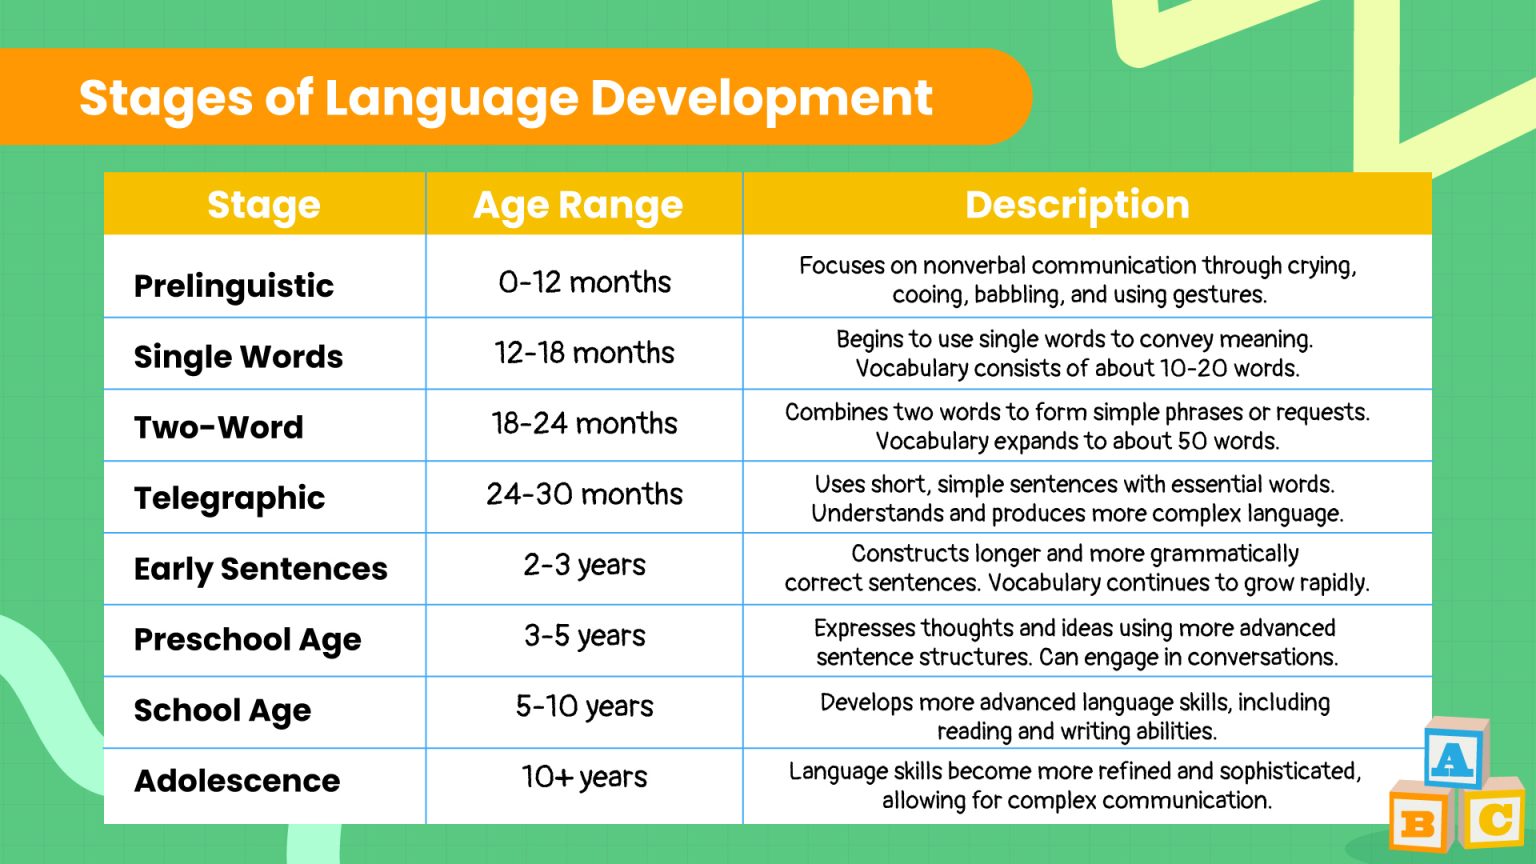 Telegraphic Stage of Language Development